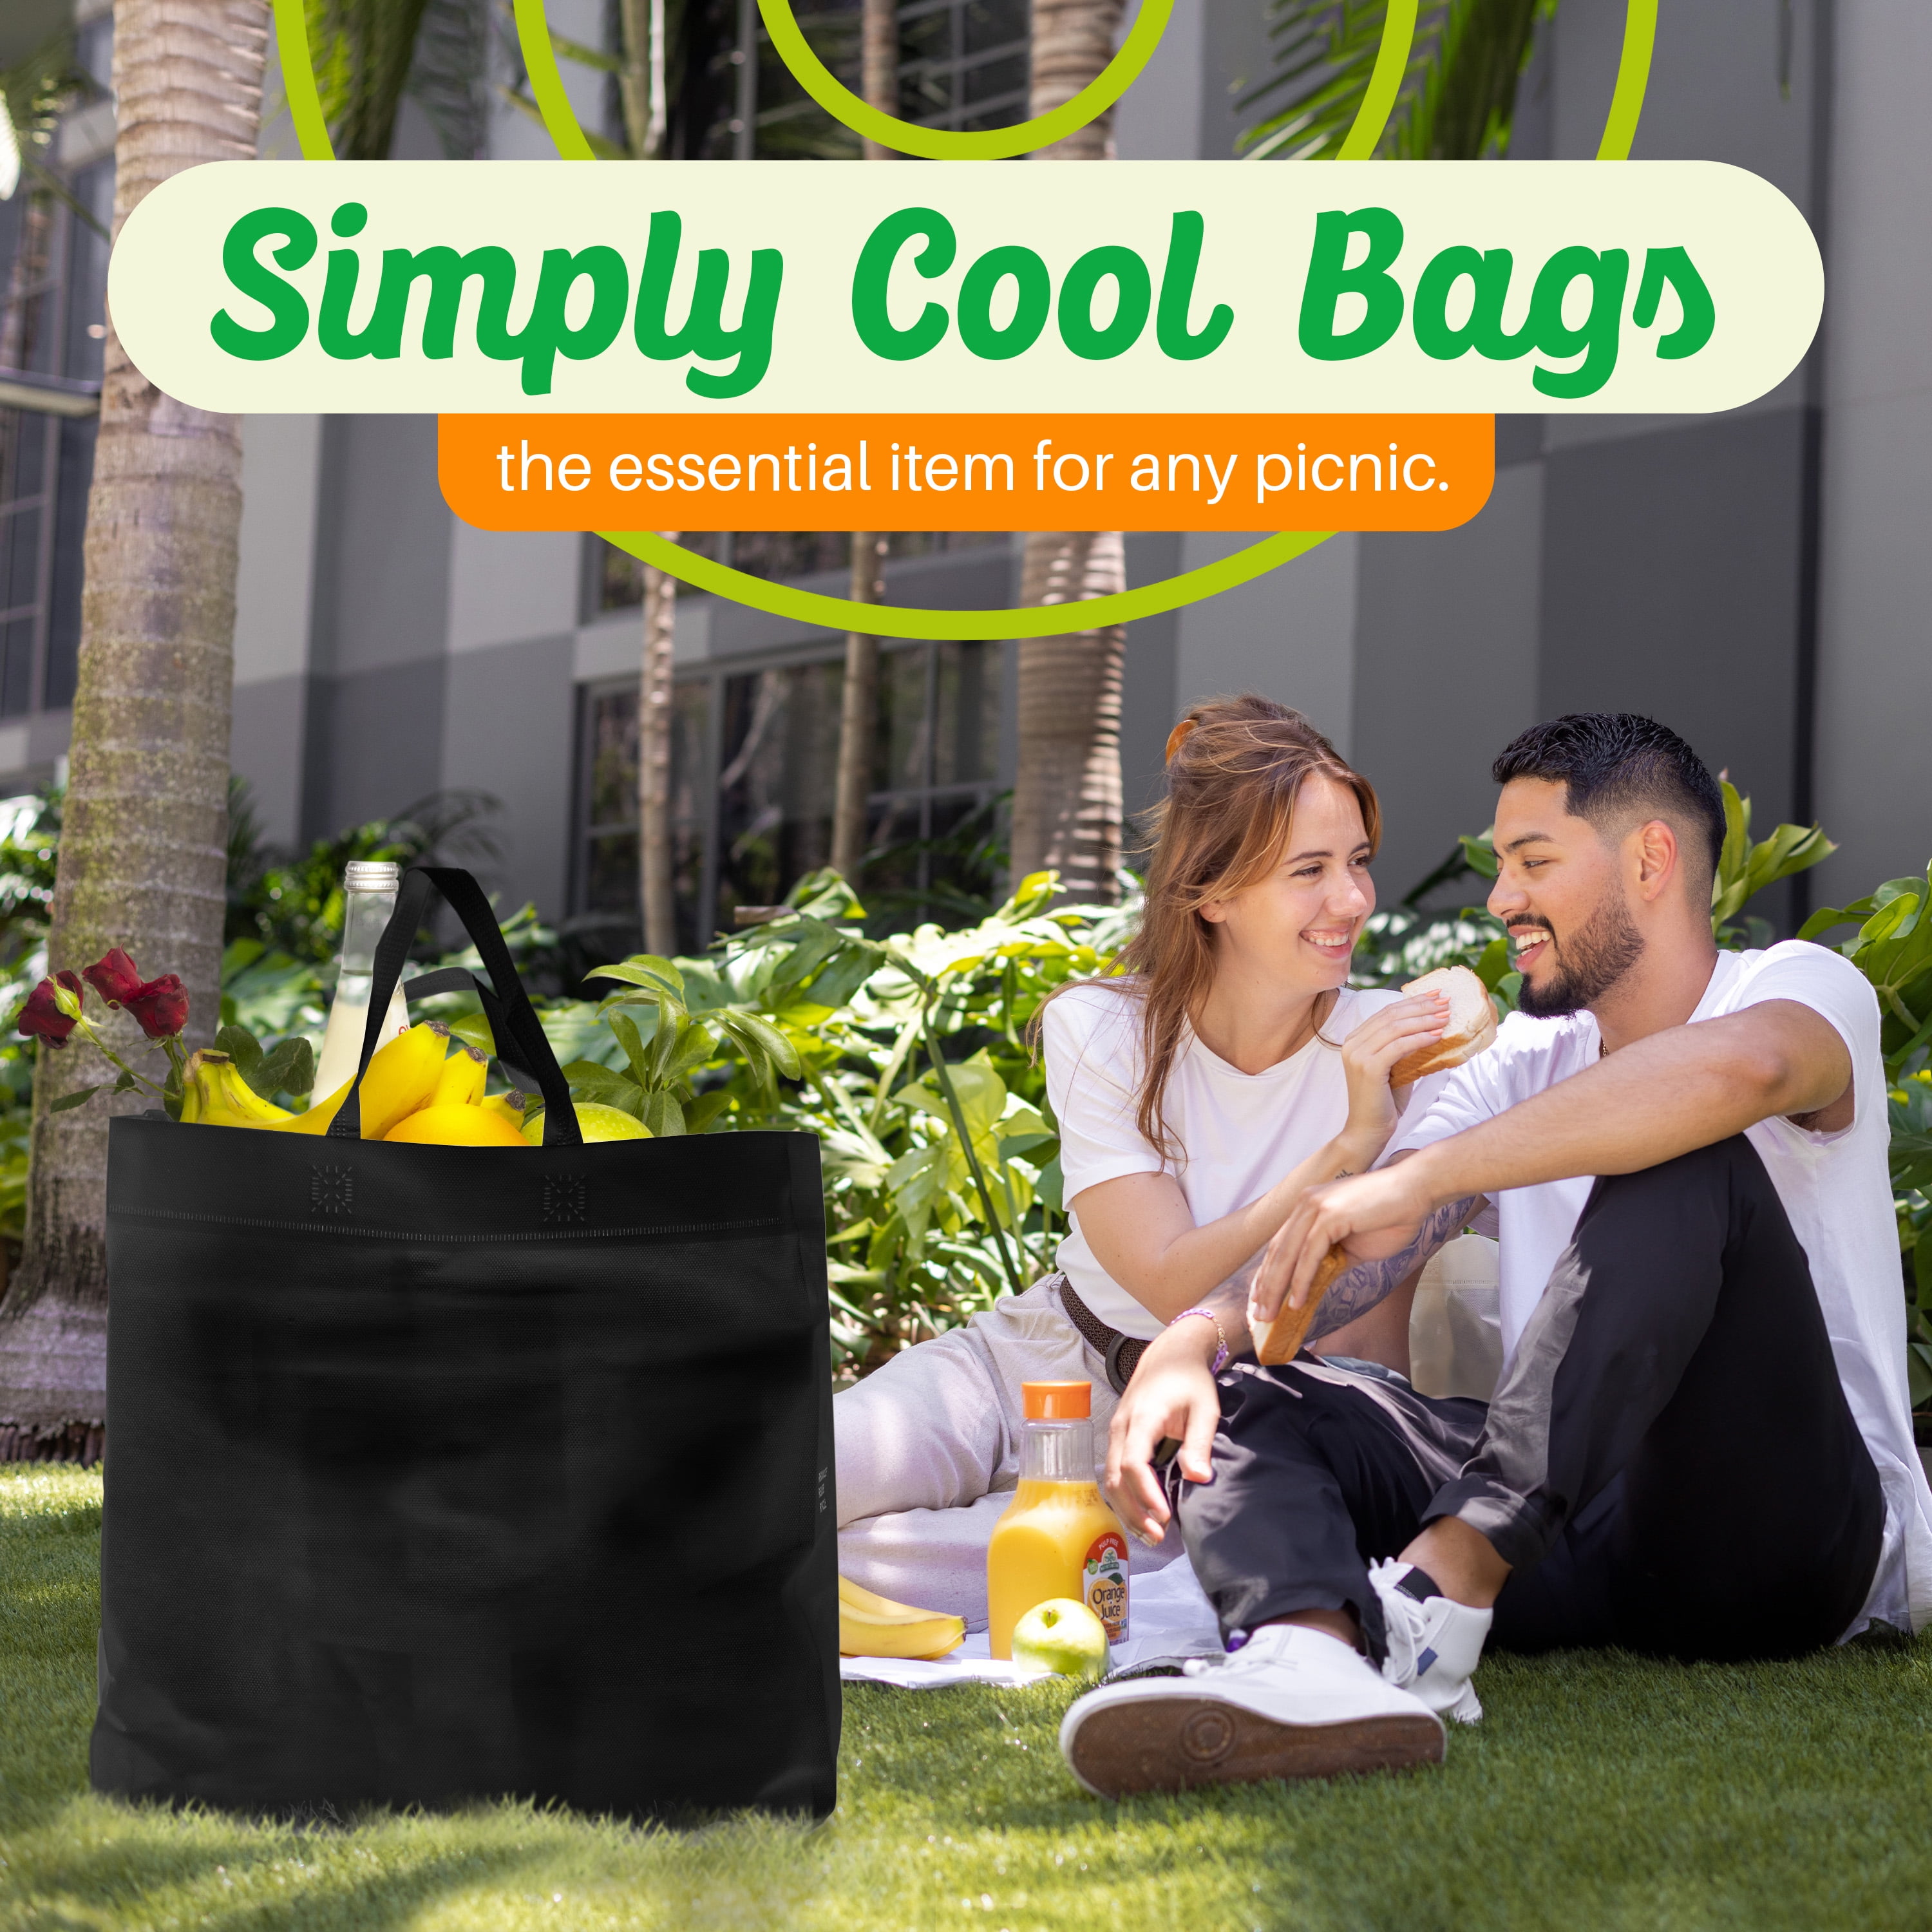 Grocery Bag 11 x 17 18lb. Cardstock - 50 Pack